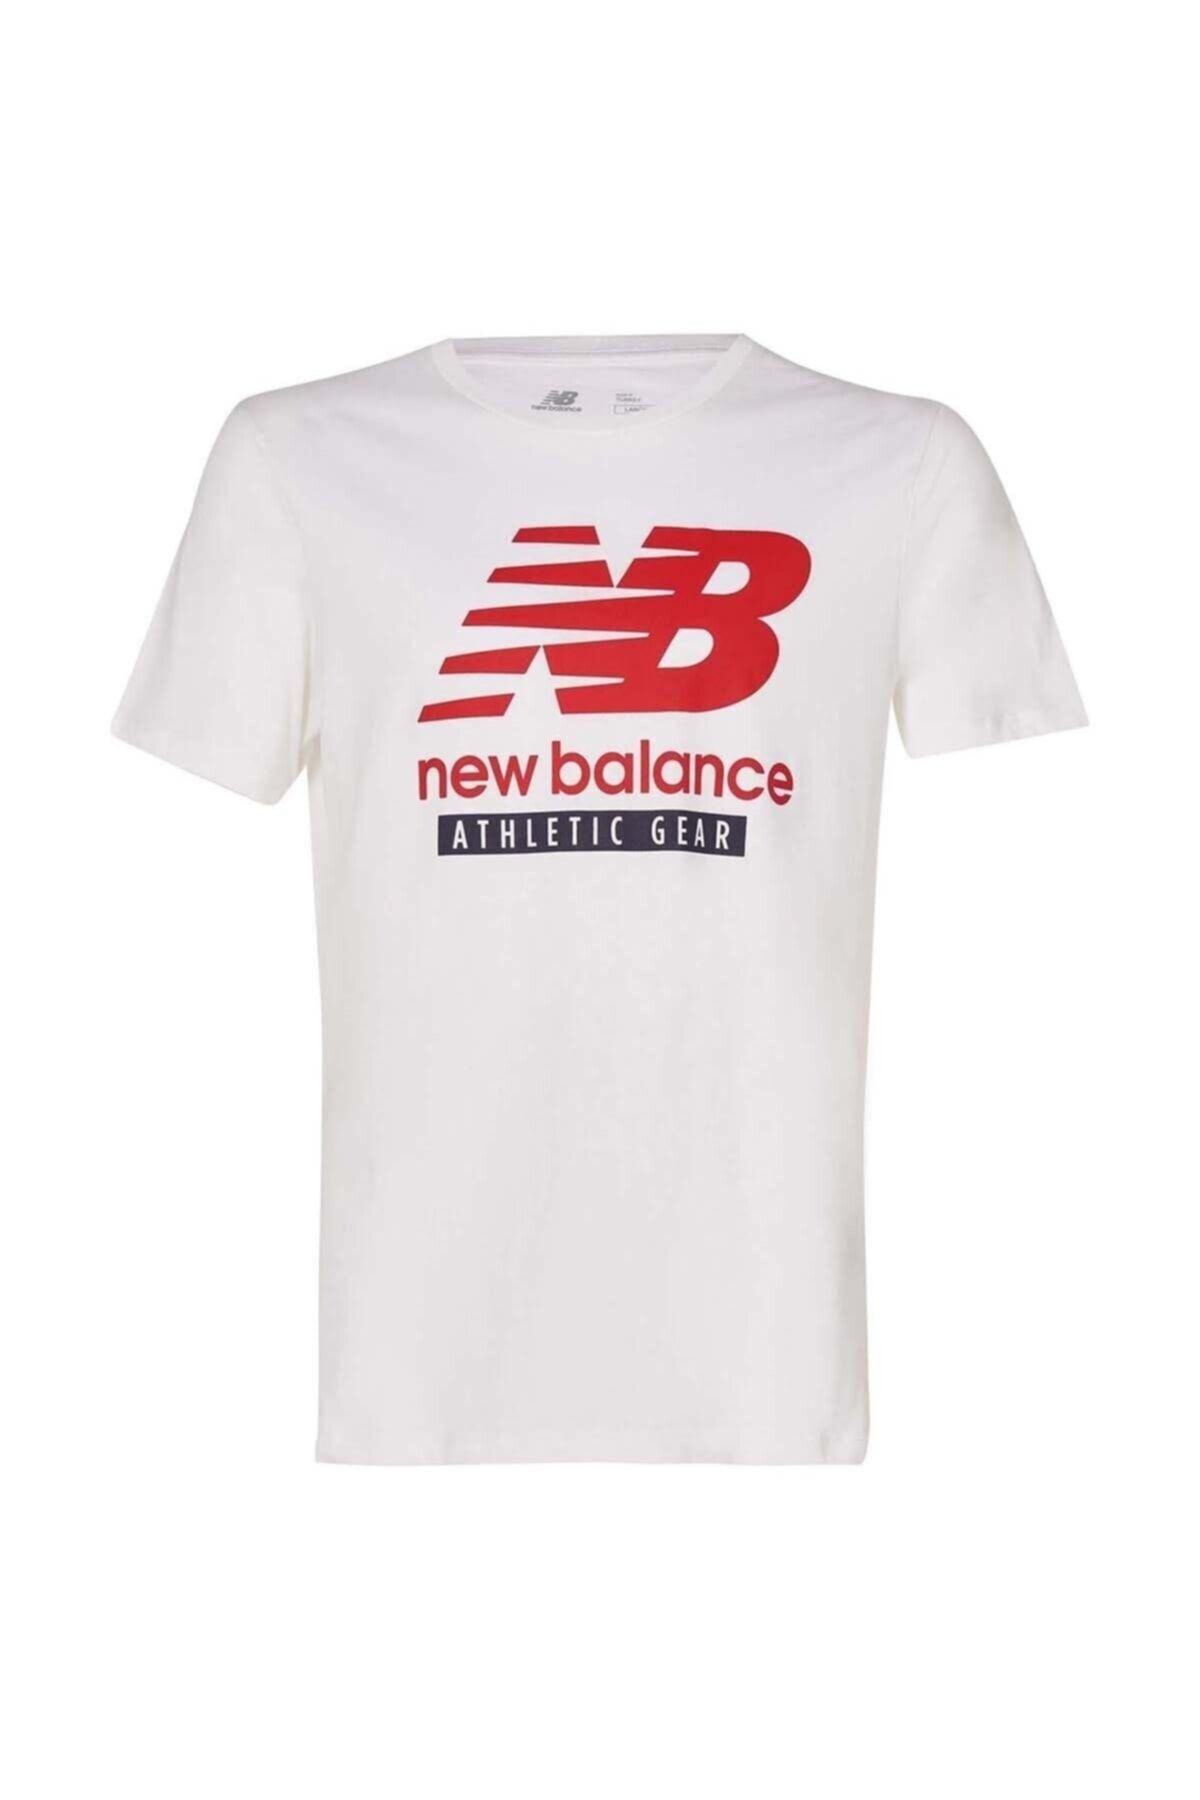 New Balance Nb Mens Lifestyle T-shirt